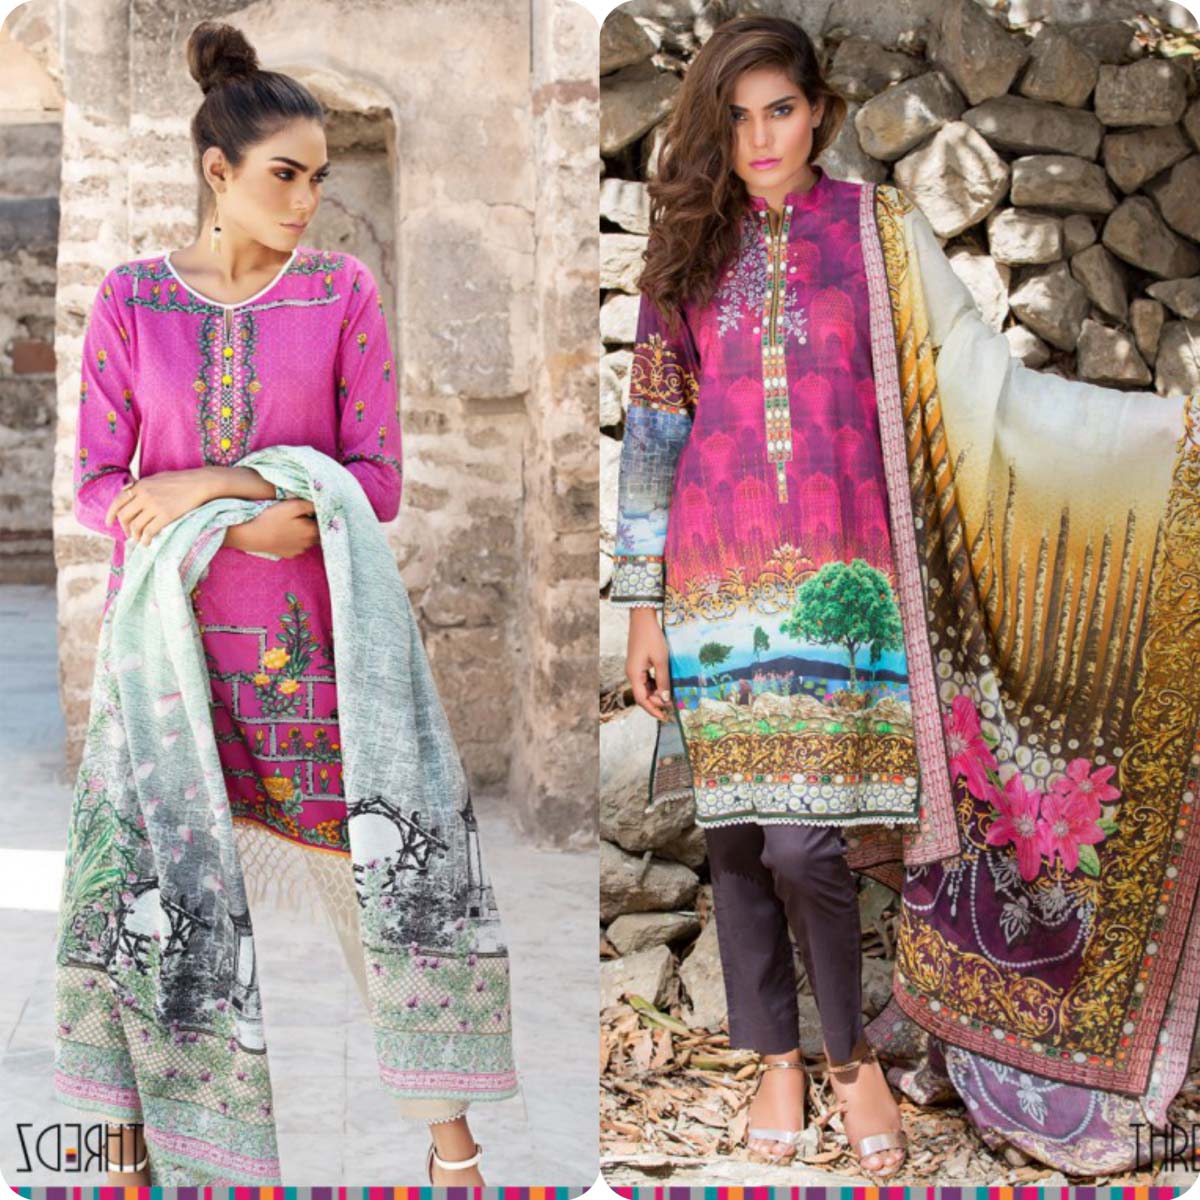 Stylish Embroidered Eid KurtisTunics for Girls By THREDZ 2016-2016 Complete Look-Book (5)